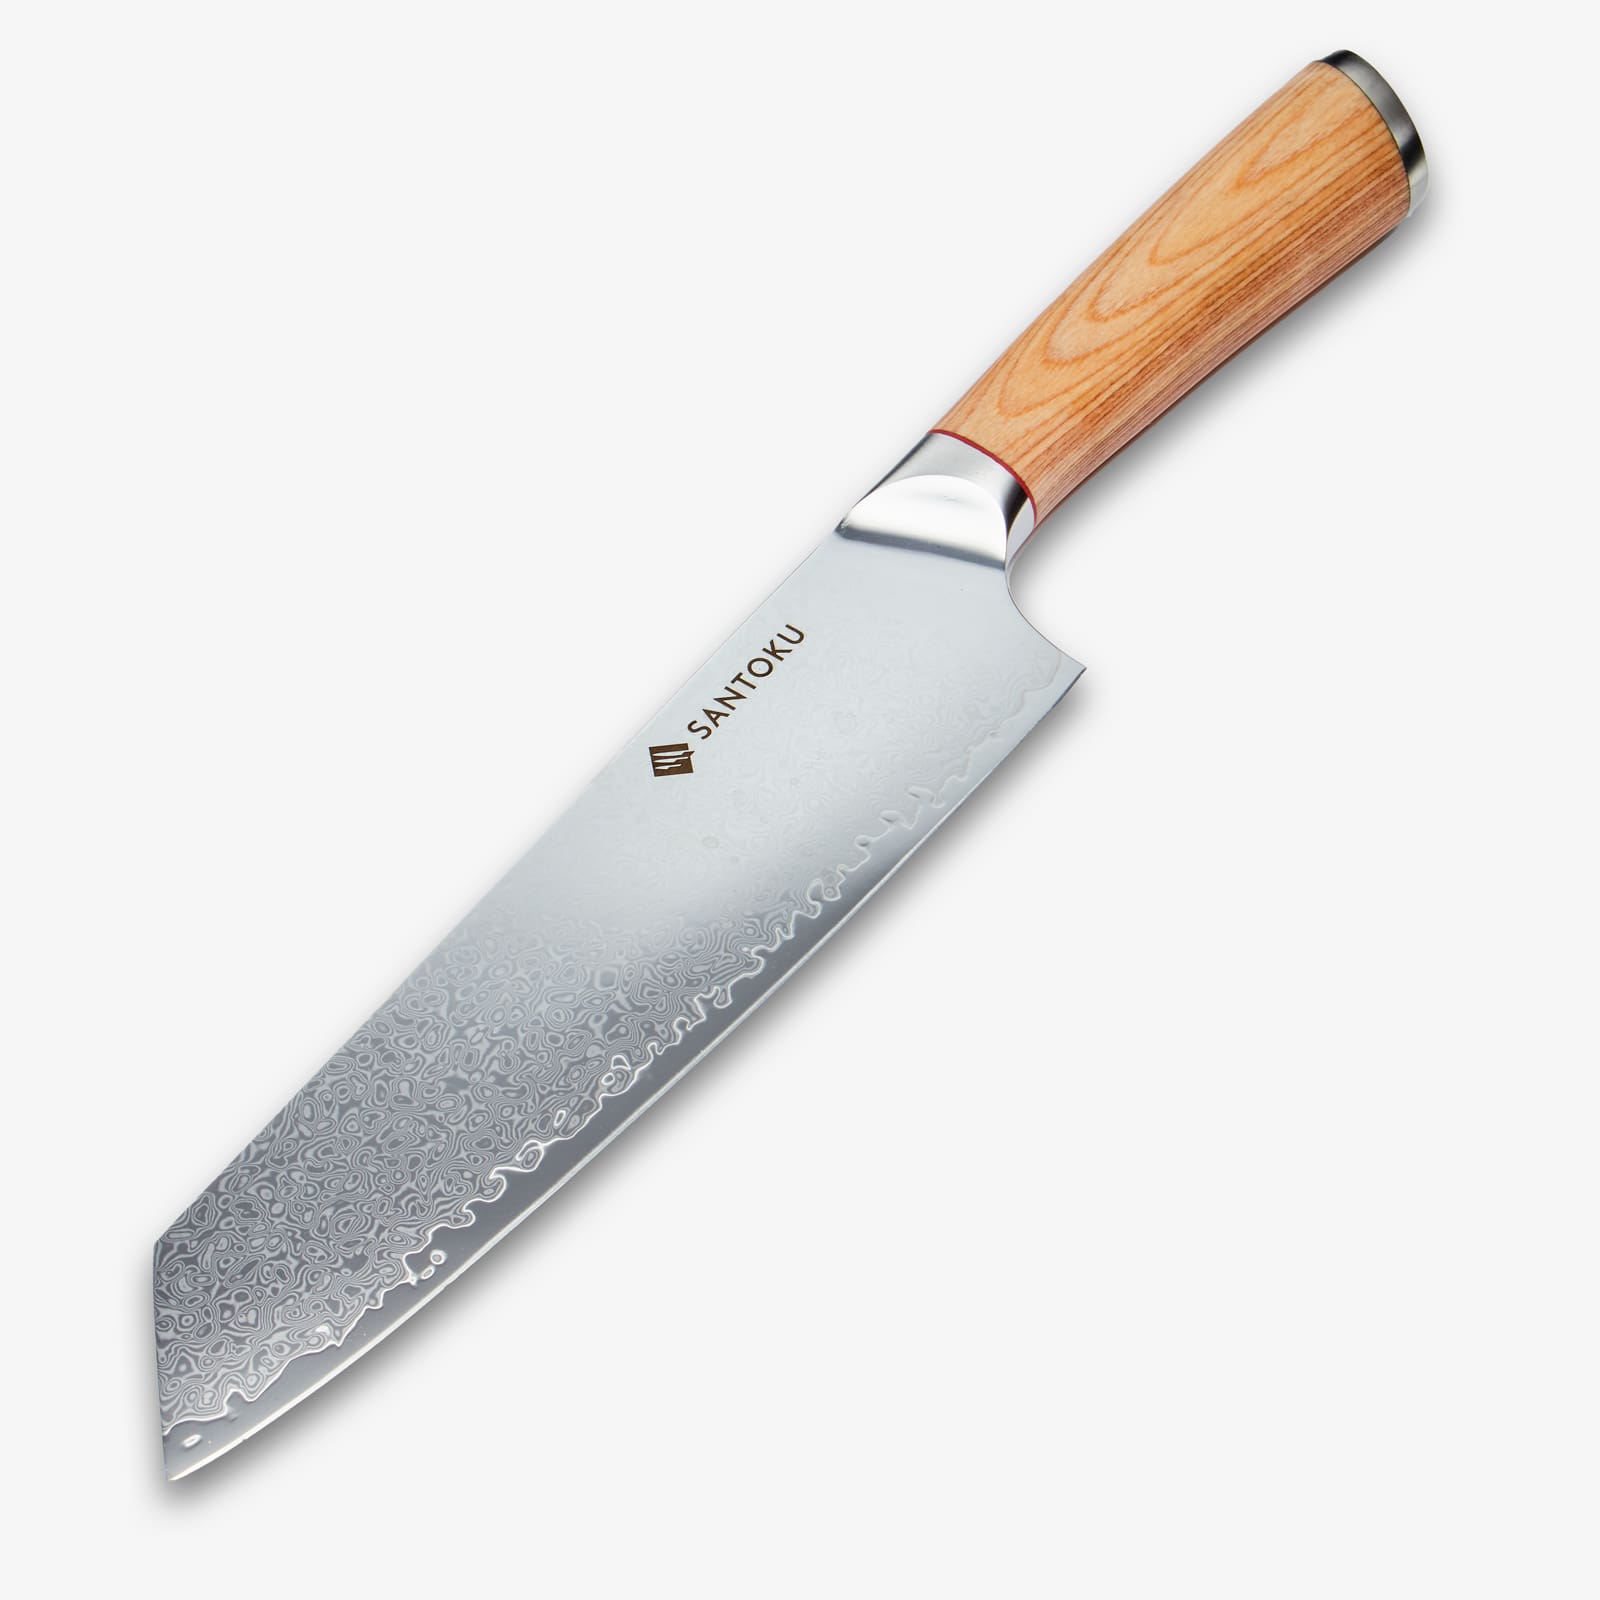 Haruta (はる はる) 8 tommer Kiritsuke kniv